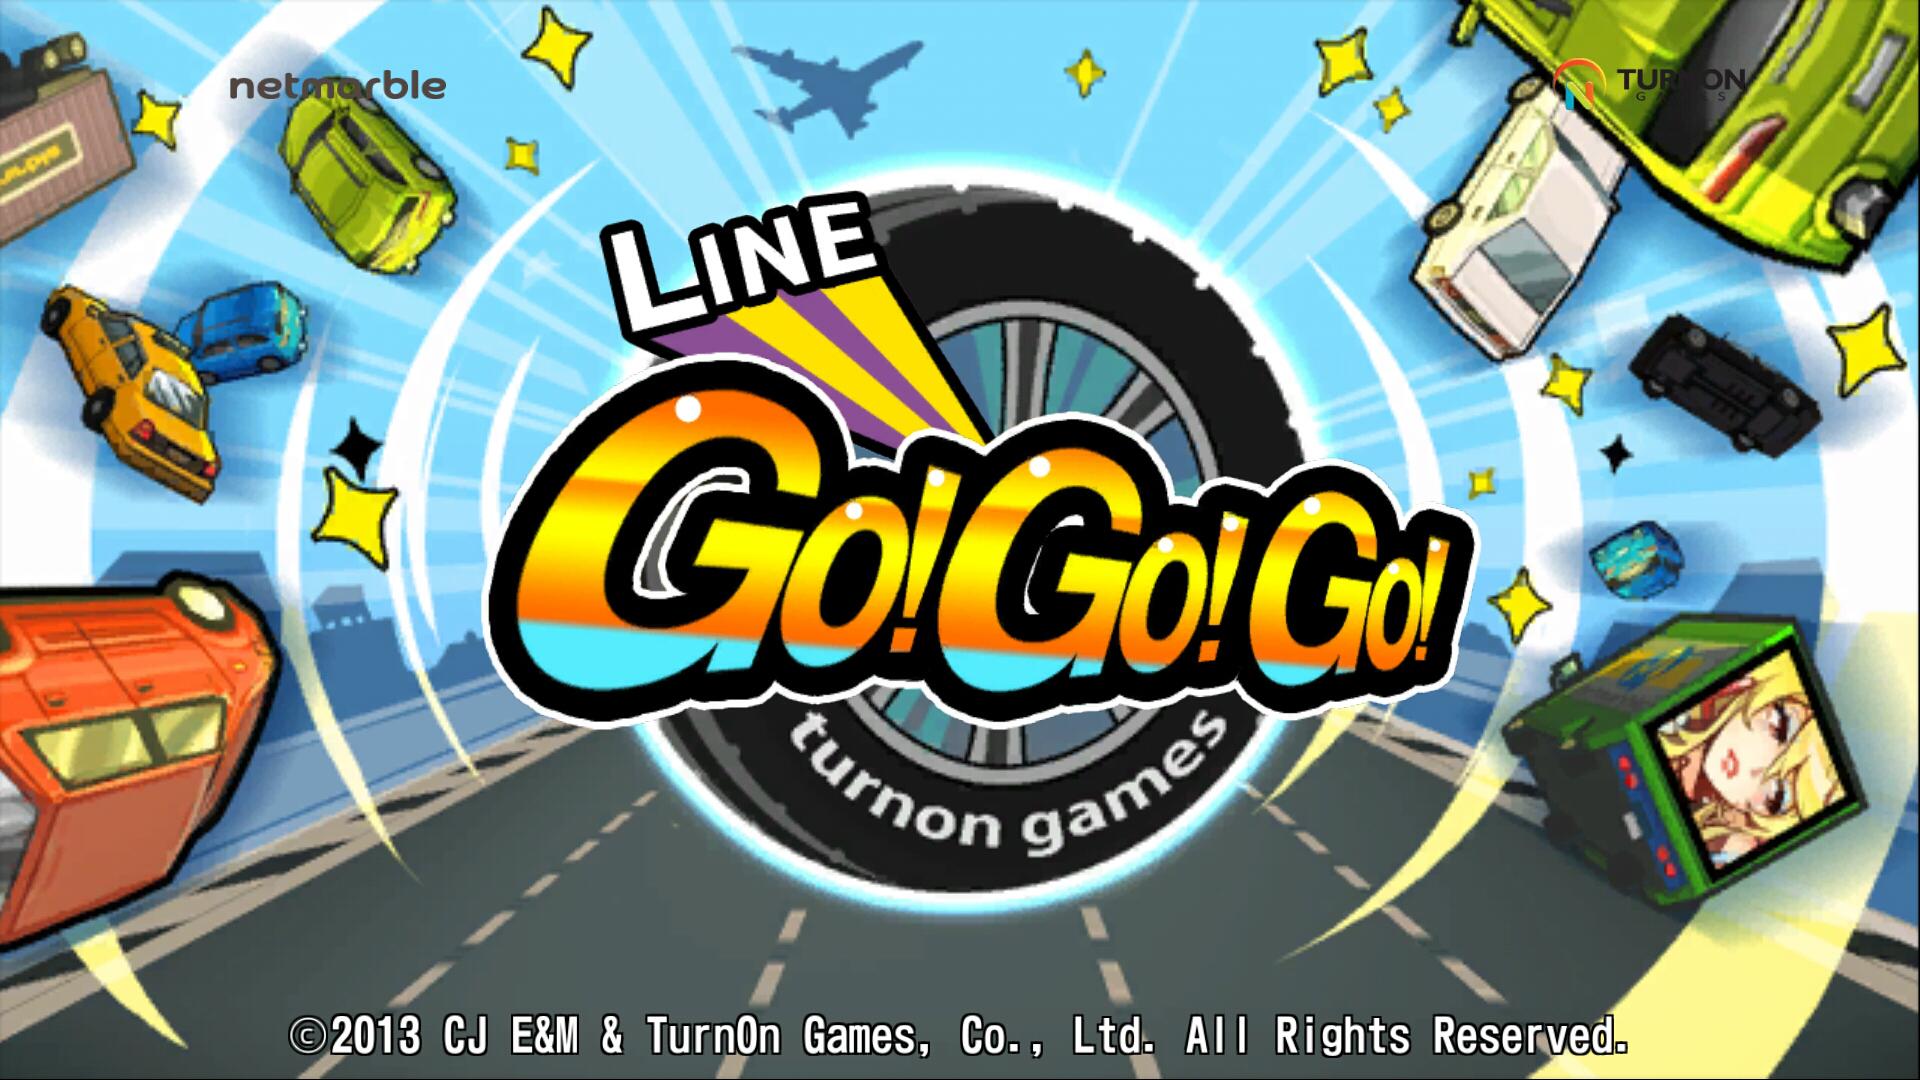 LINE Go!Go!Go!